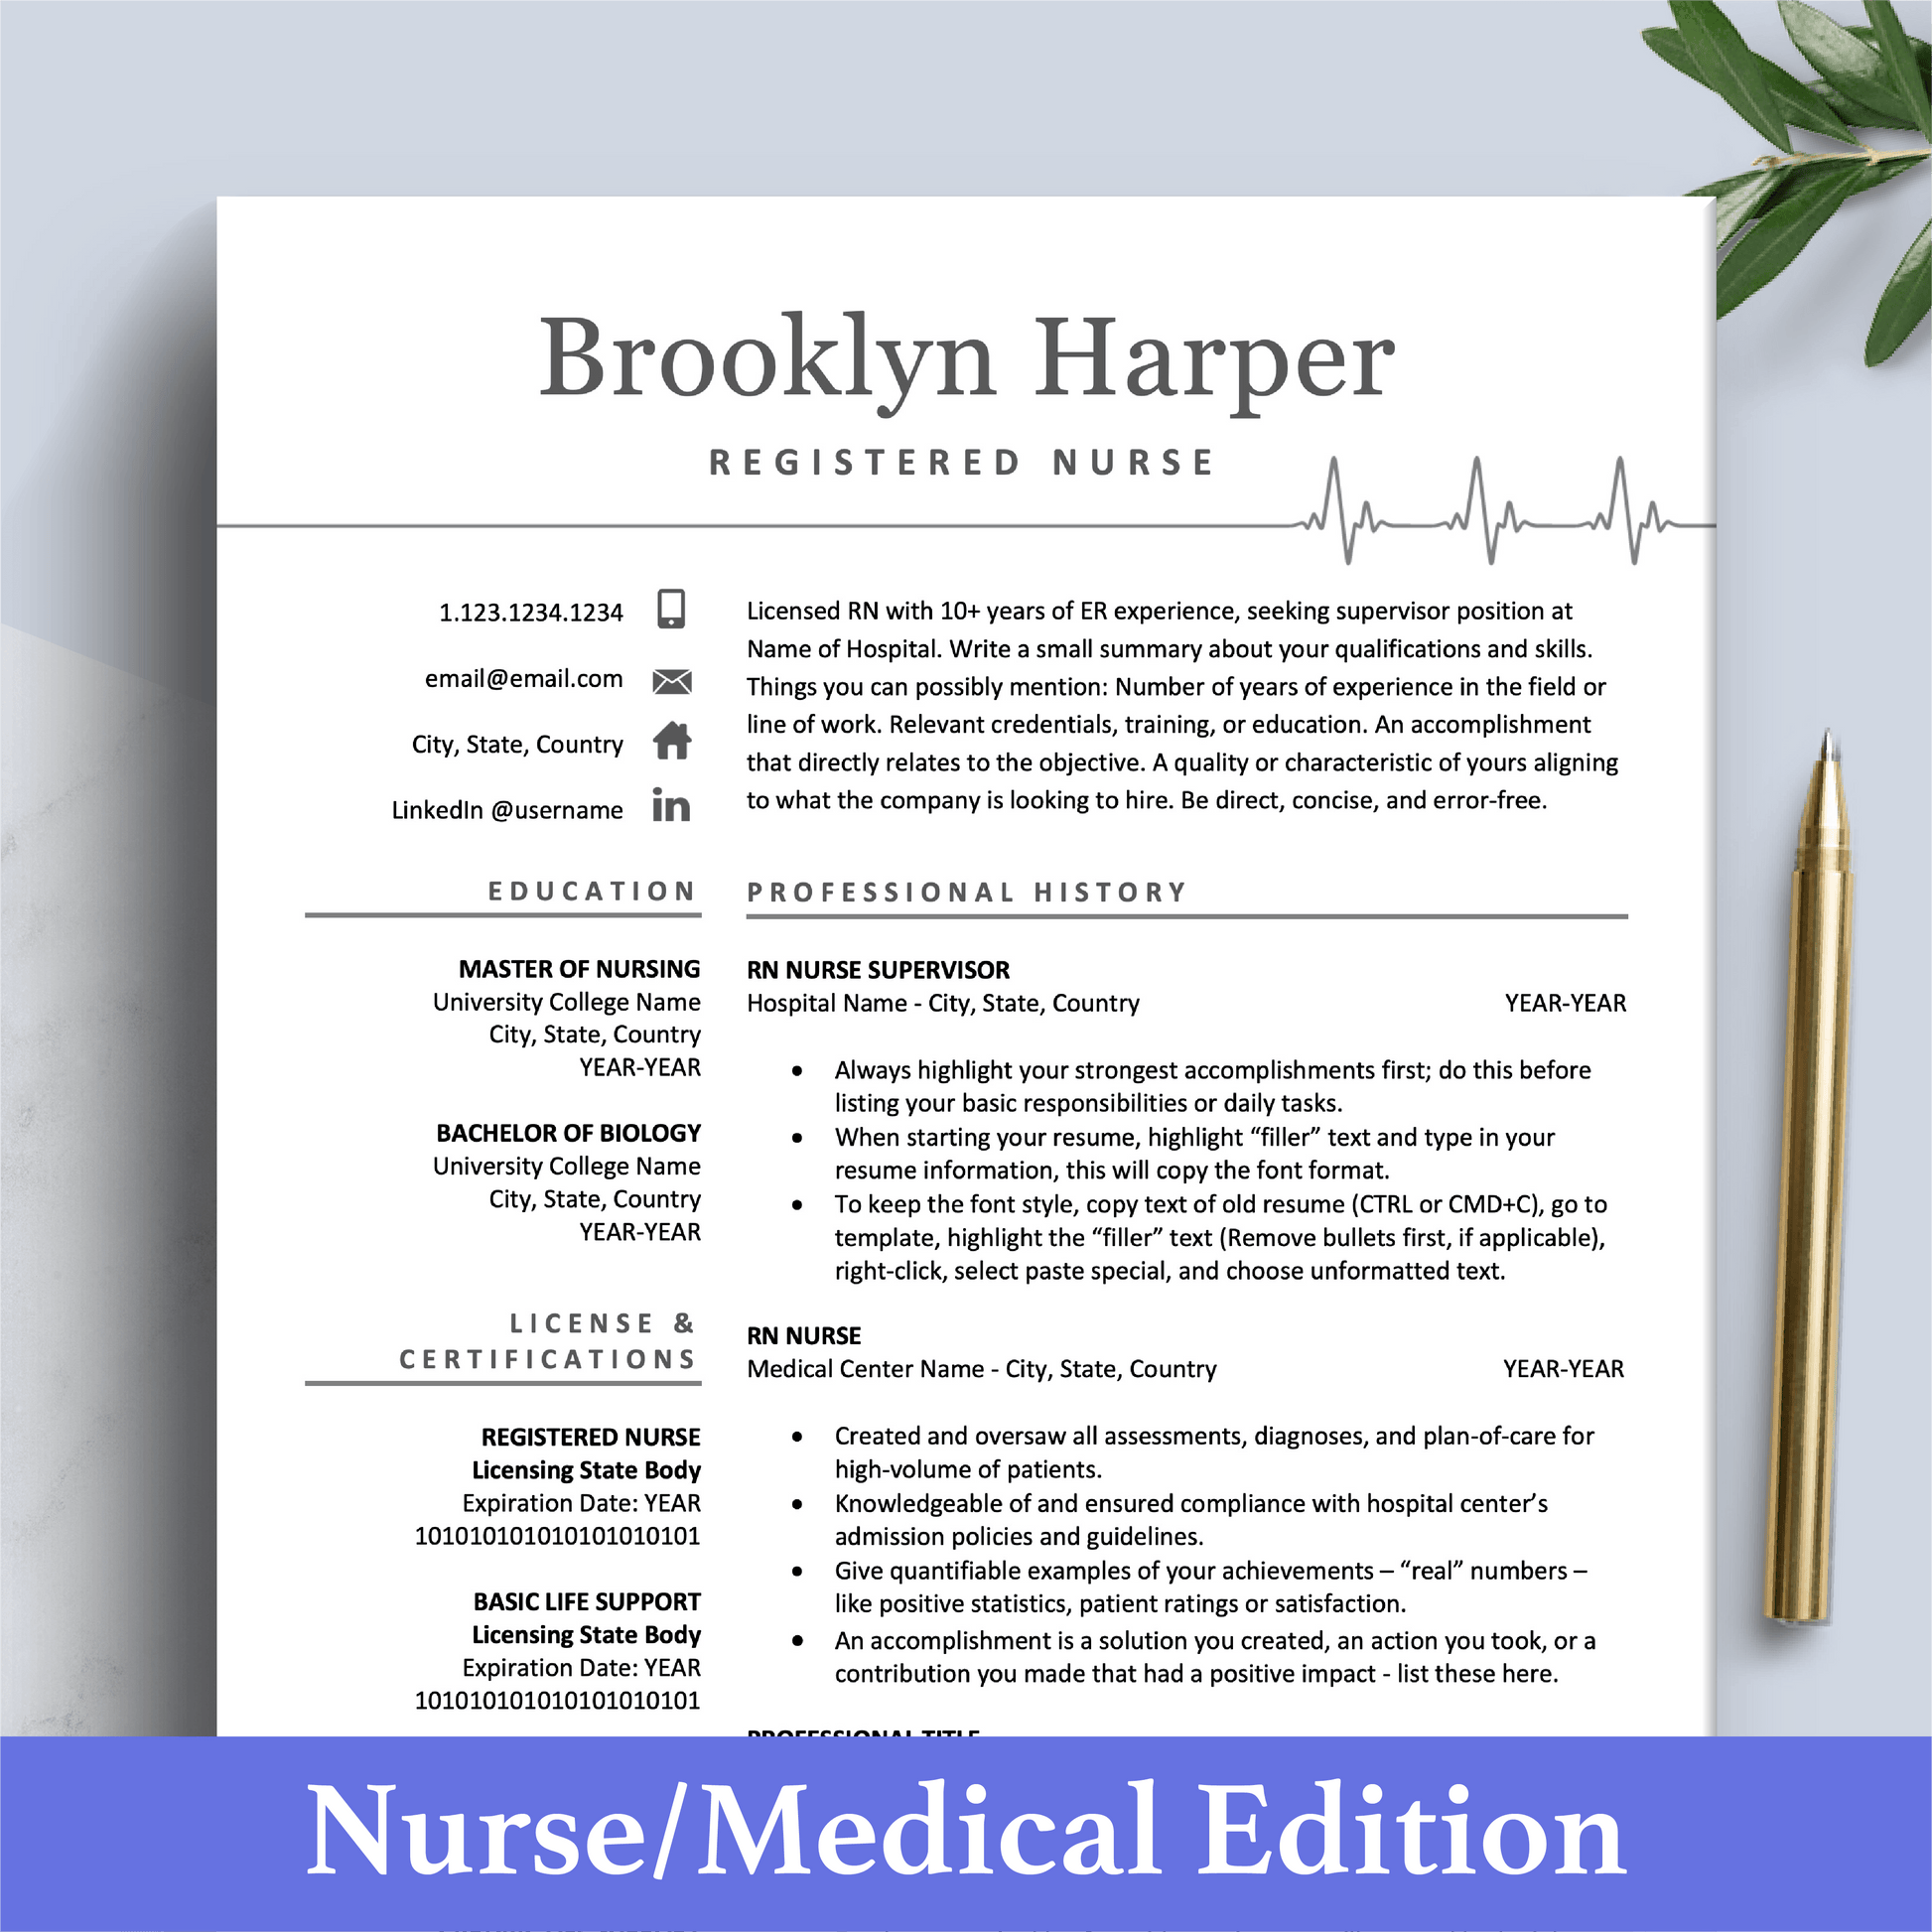 Nurse Resume Designs | Medical CV | Physician Cover Letter - The Art of Resume